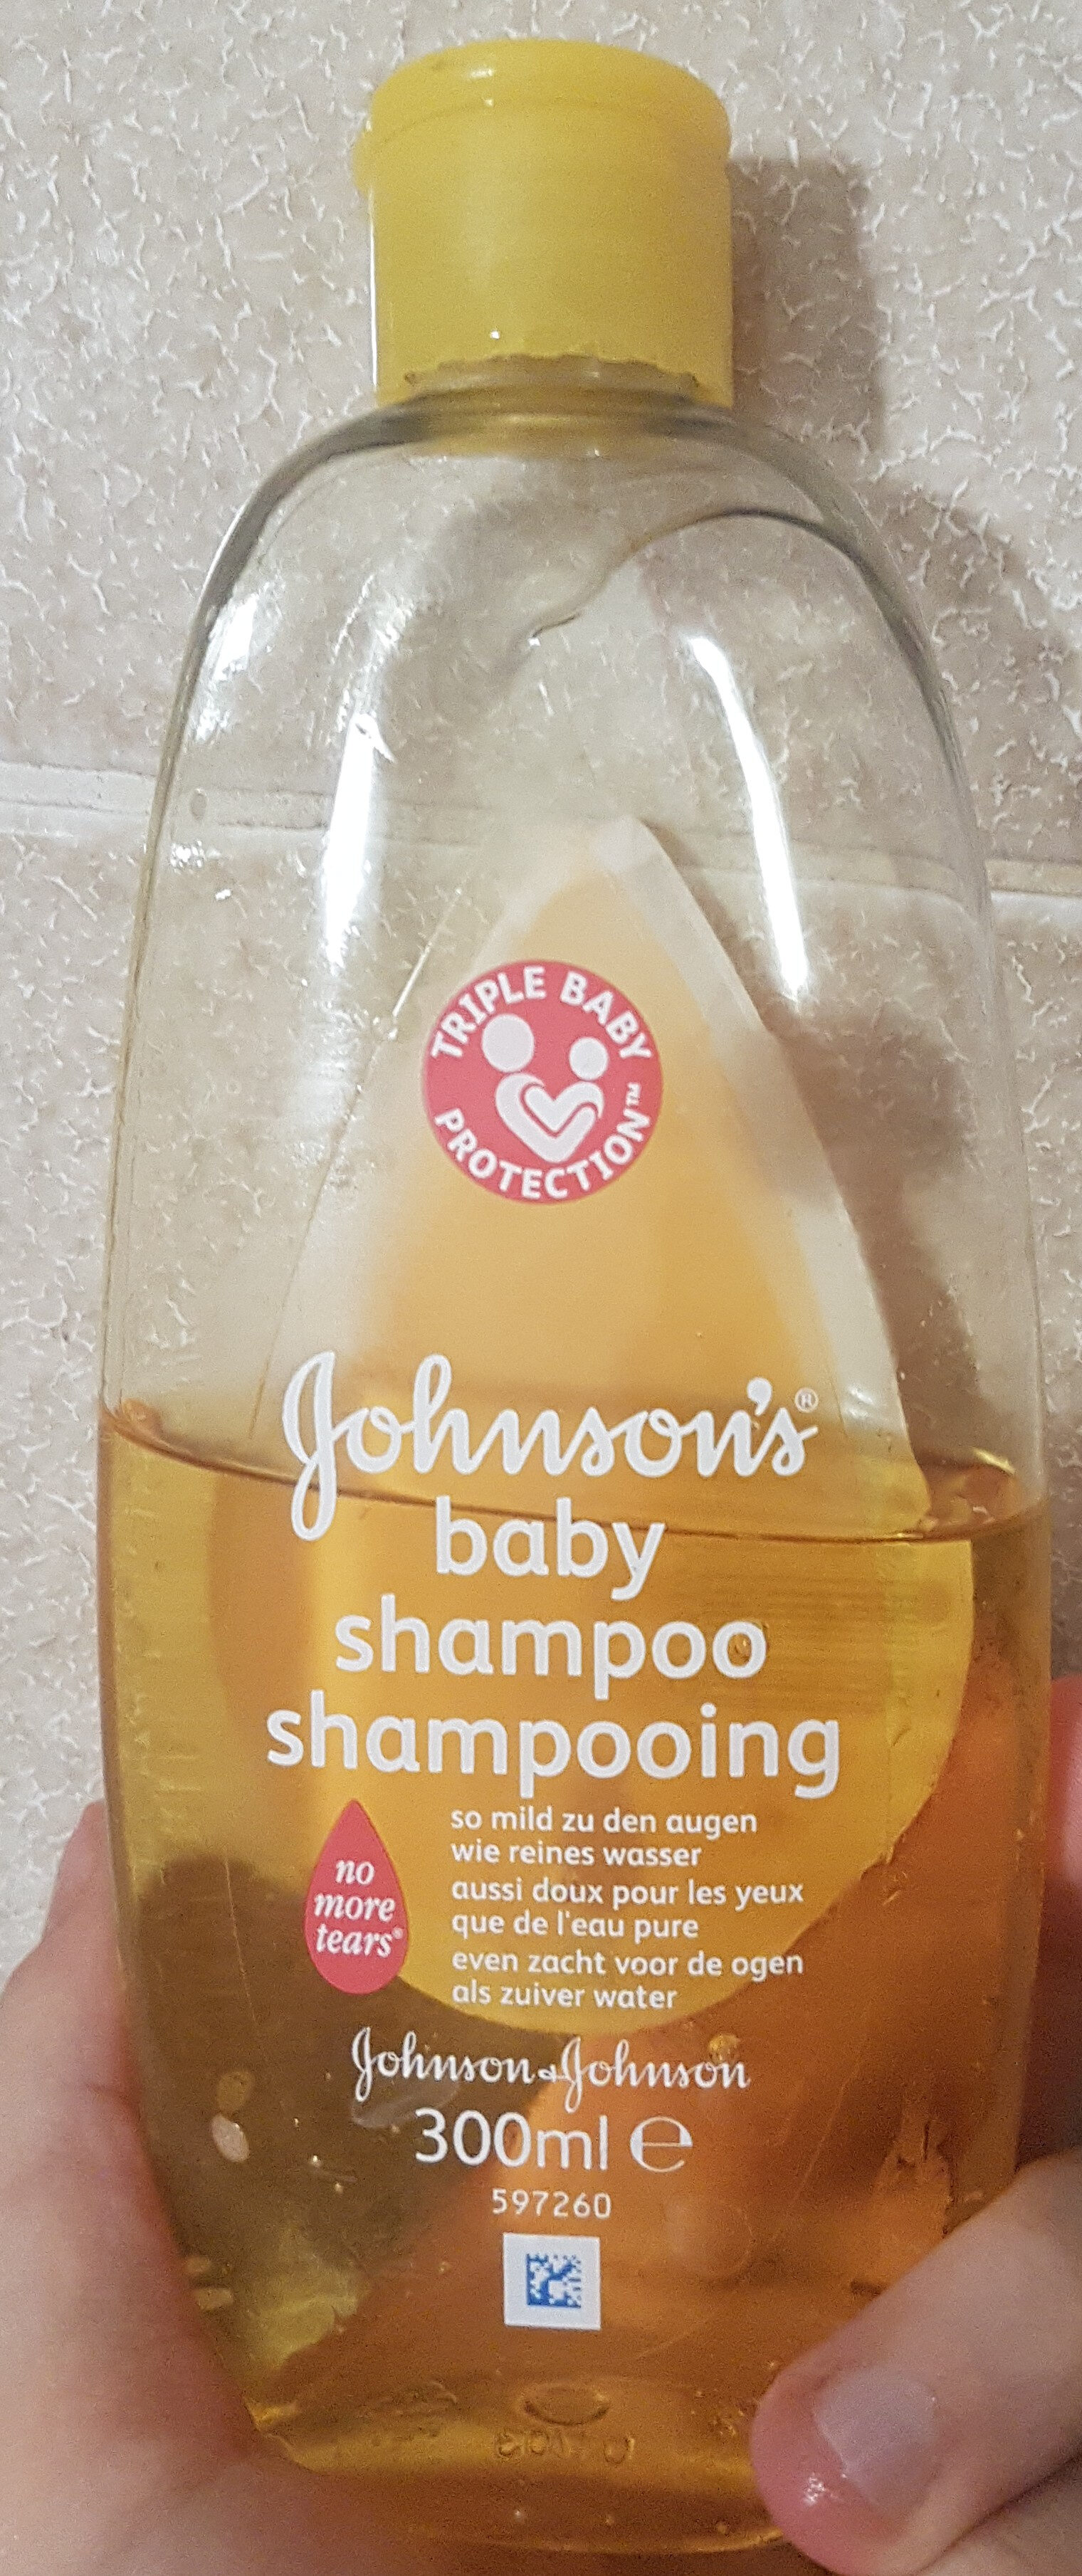 baby shampoo shampooing - Product - en